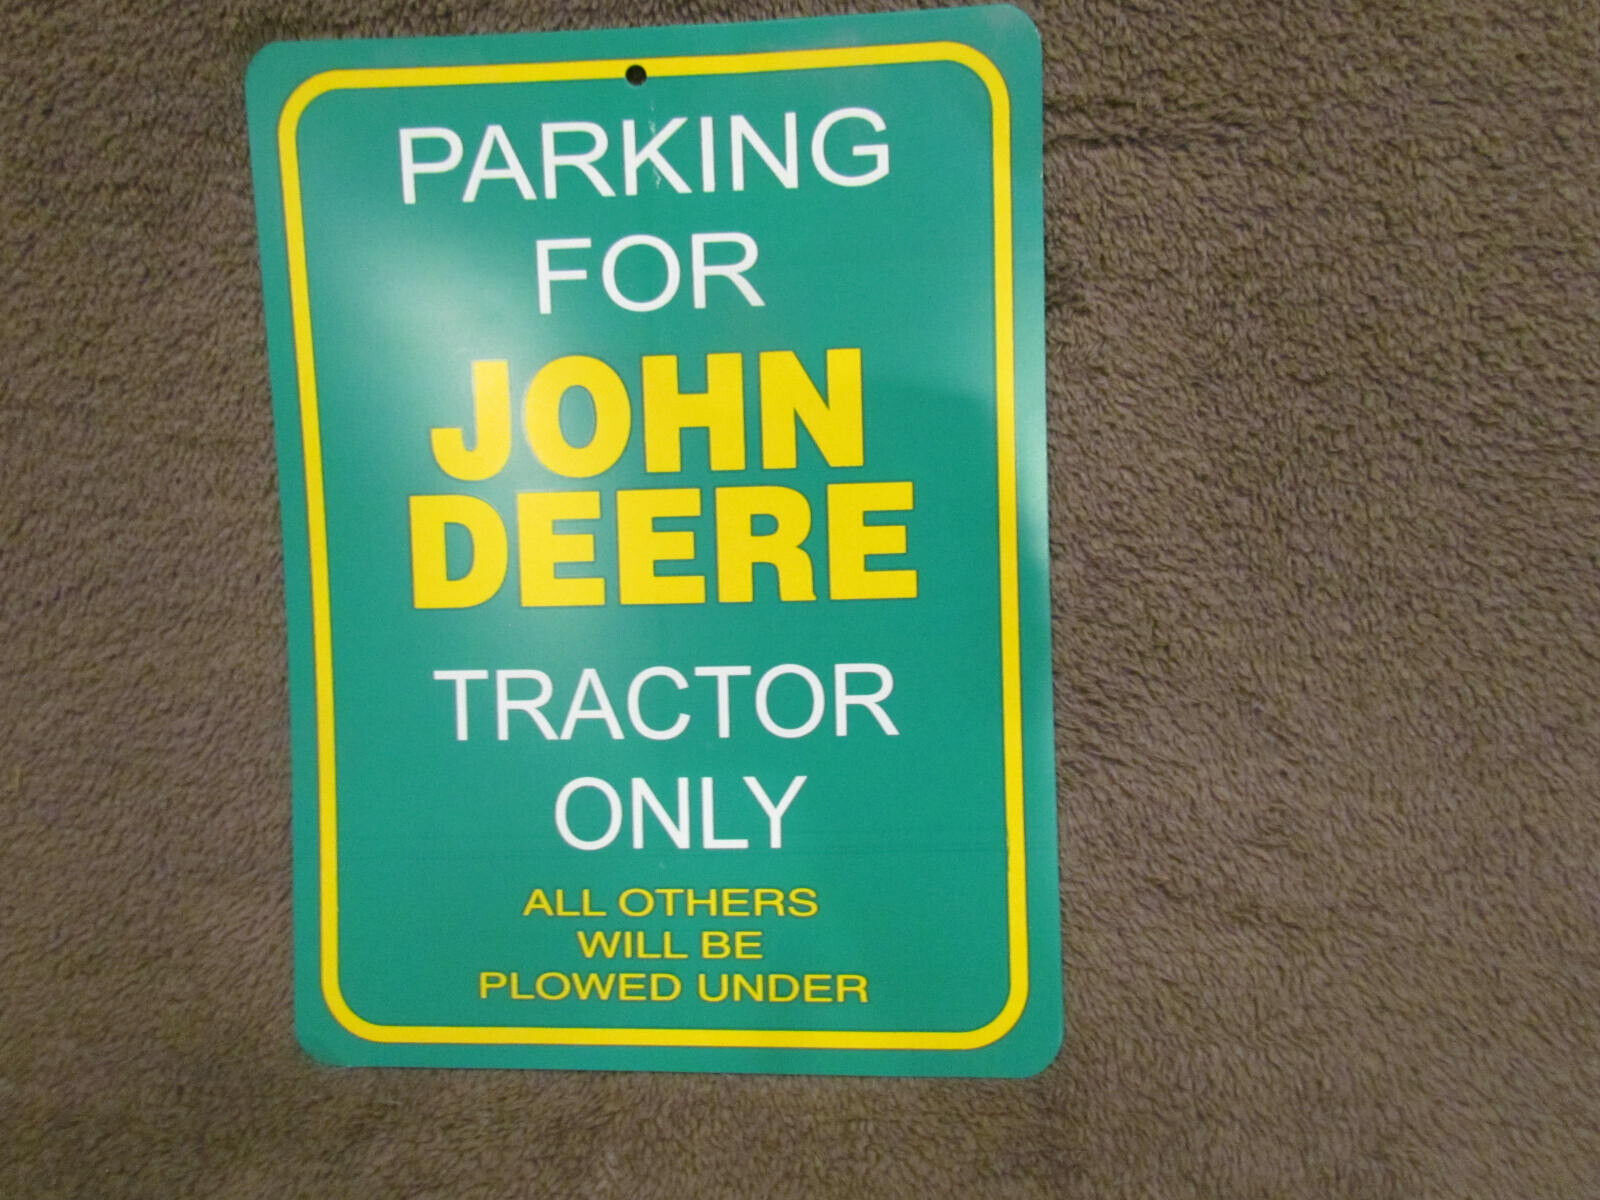 John Deere tractor parking signs (two)